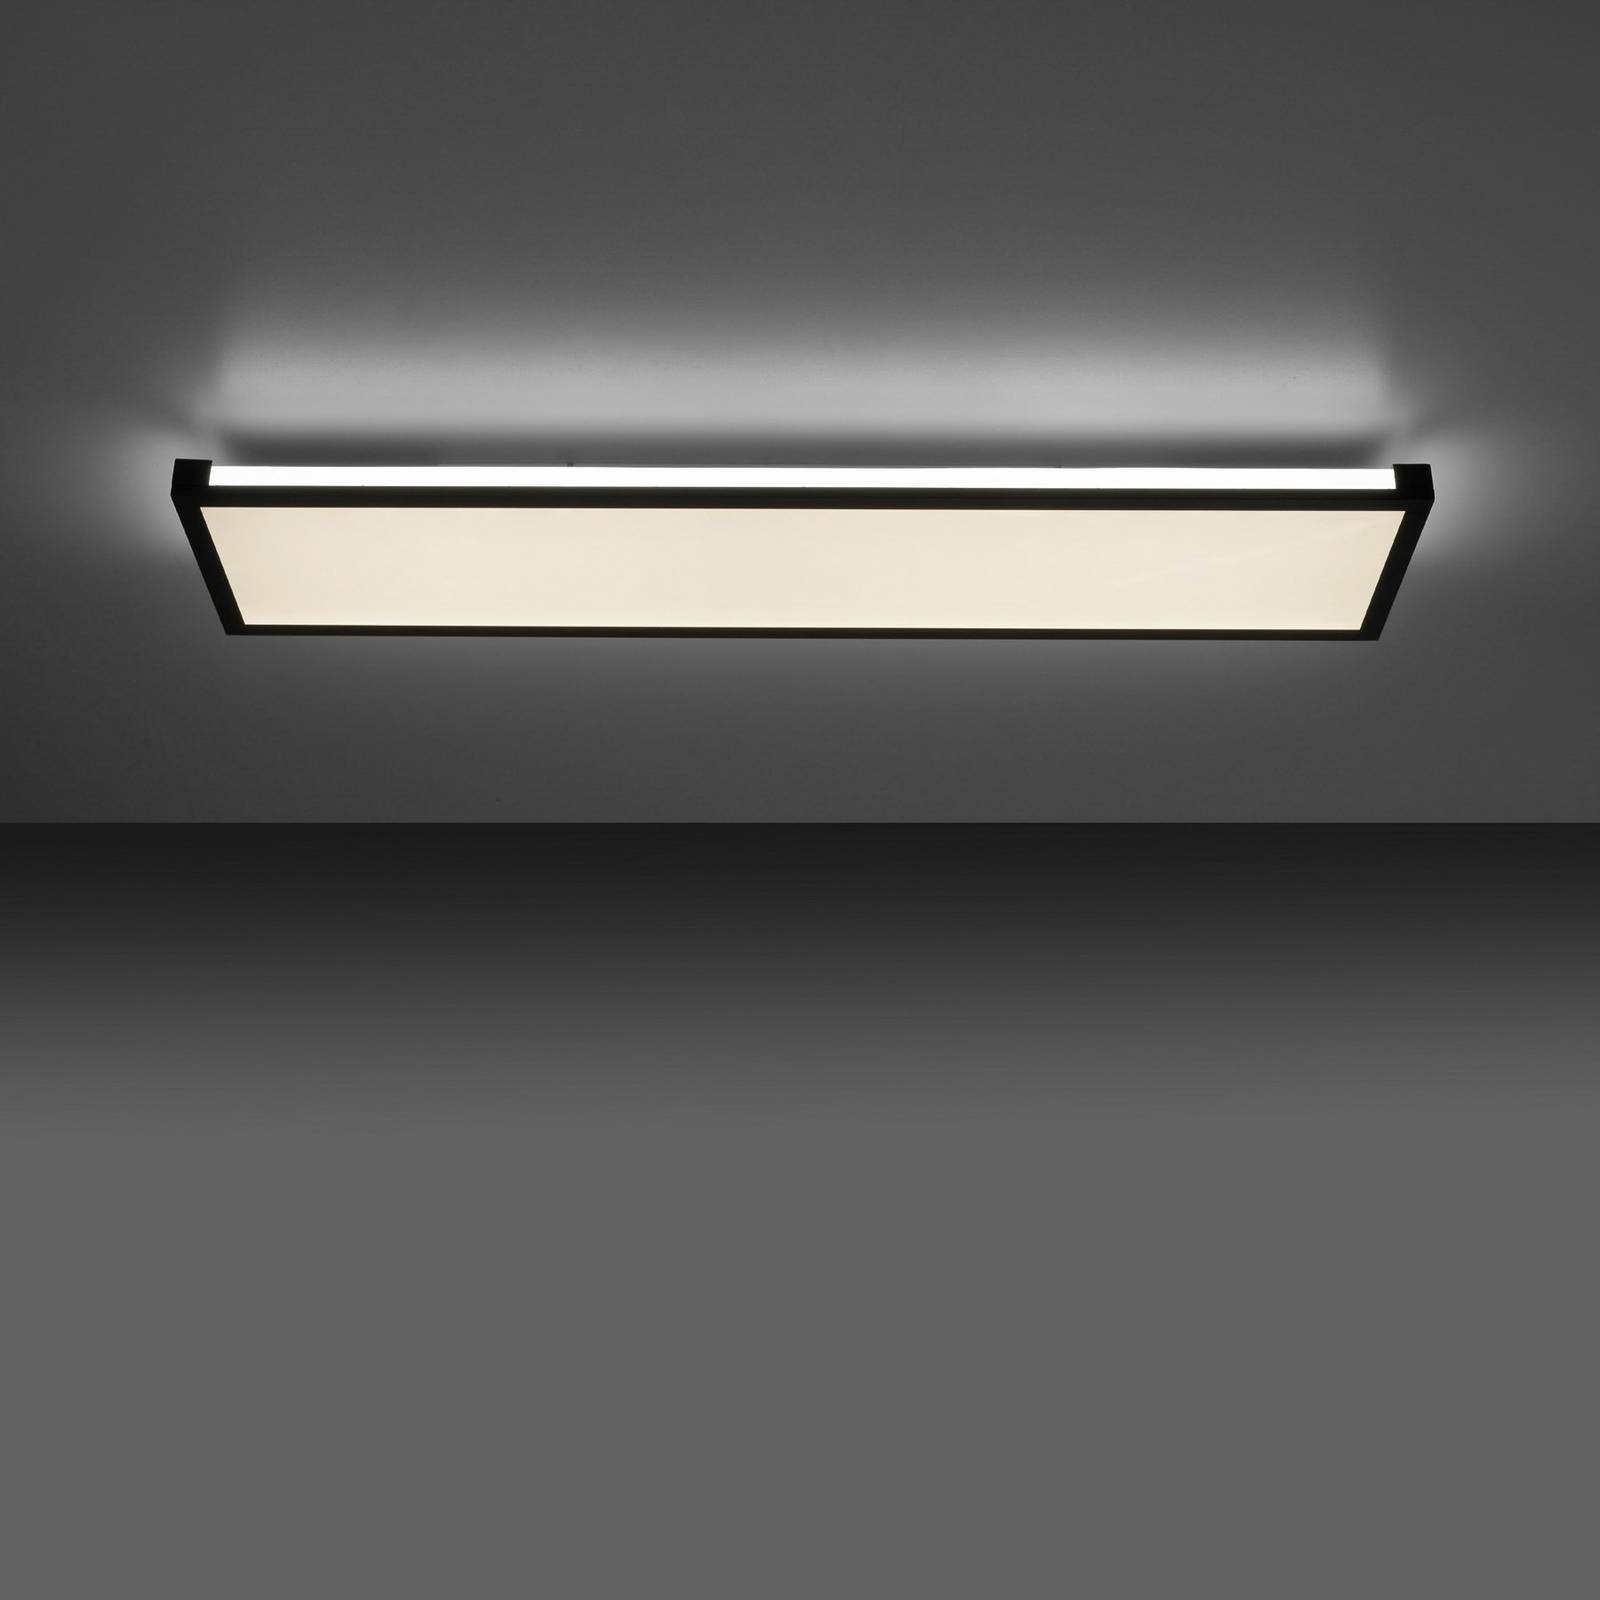 LED-Deckenlampe Mario 100x25cm, dimmbar, RGBW von JUST LIGHT.